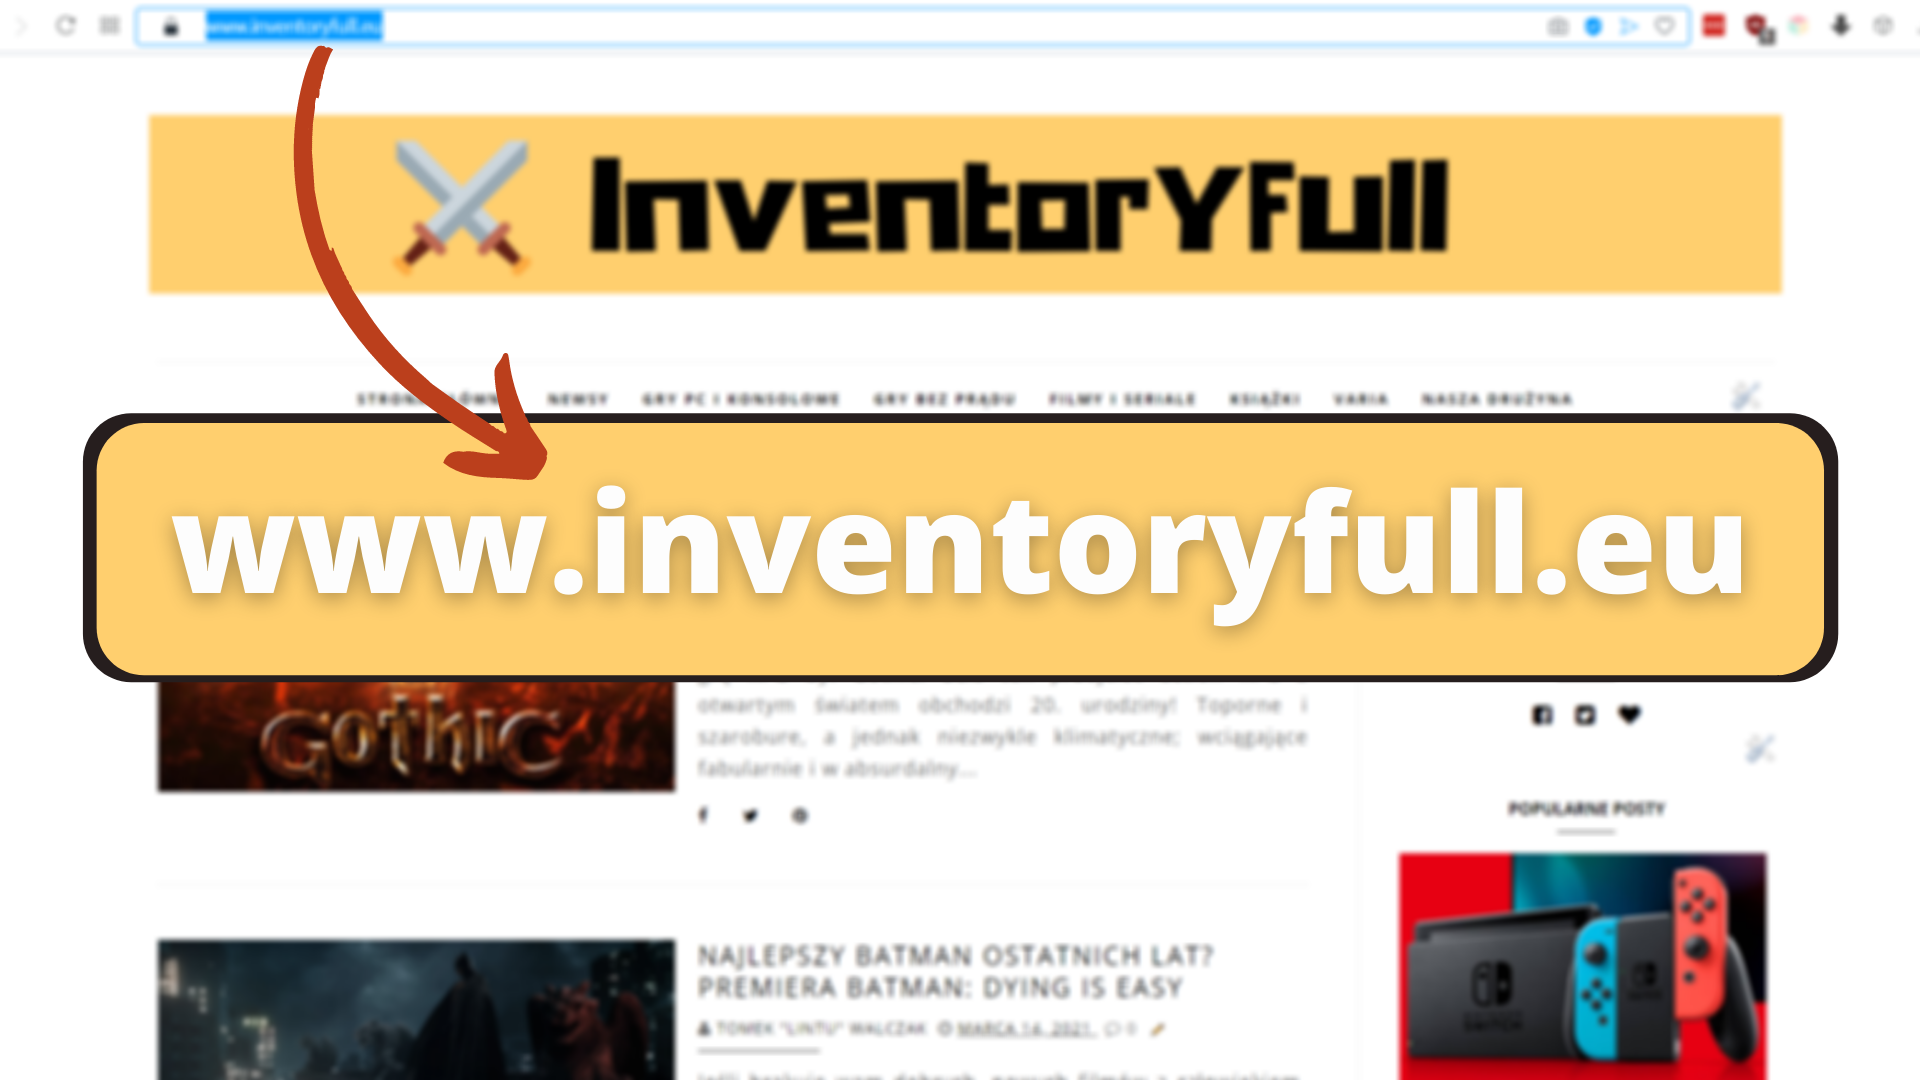 www.inventoryfull.eu